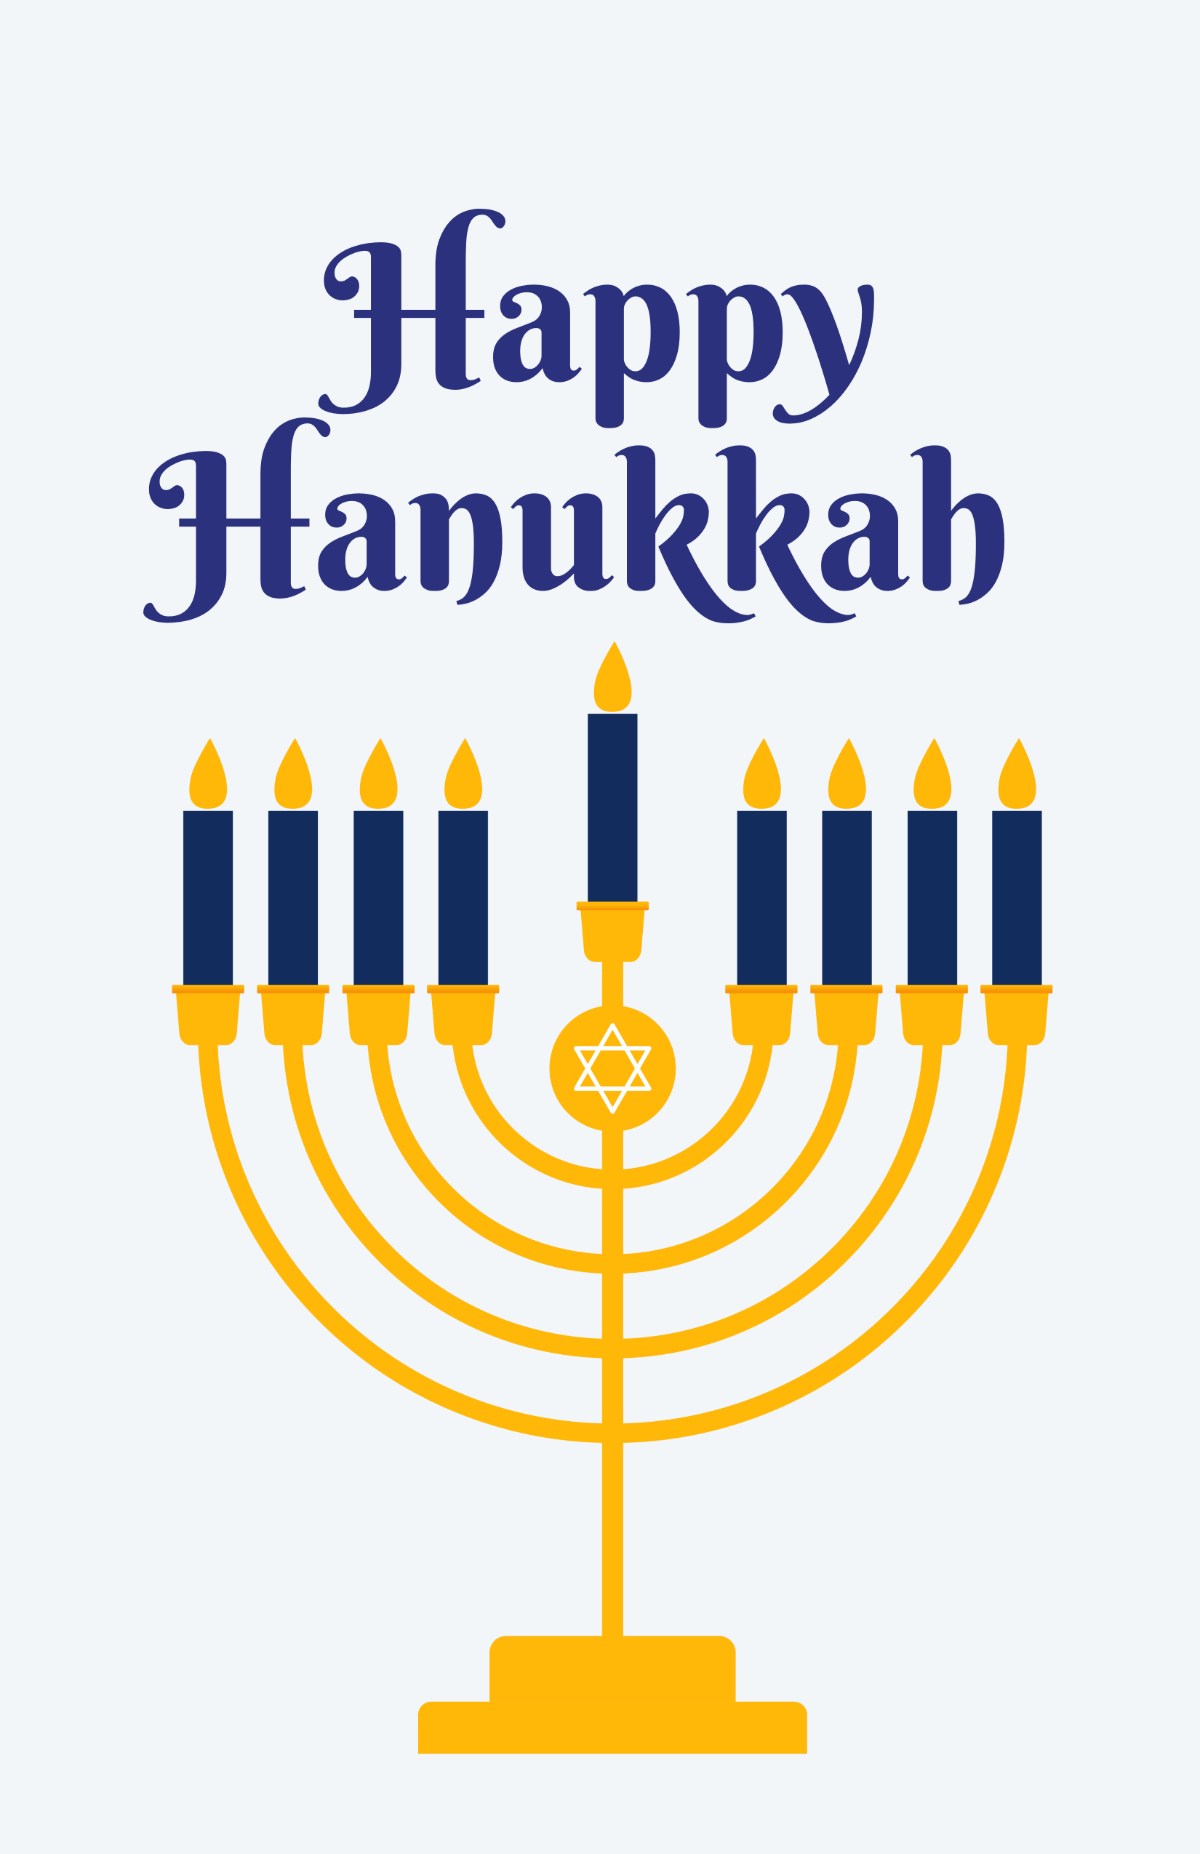 Hanukkah Candle Poster